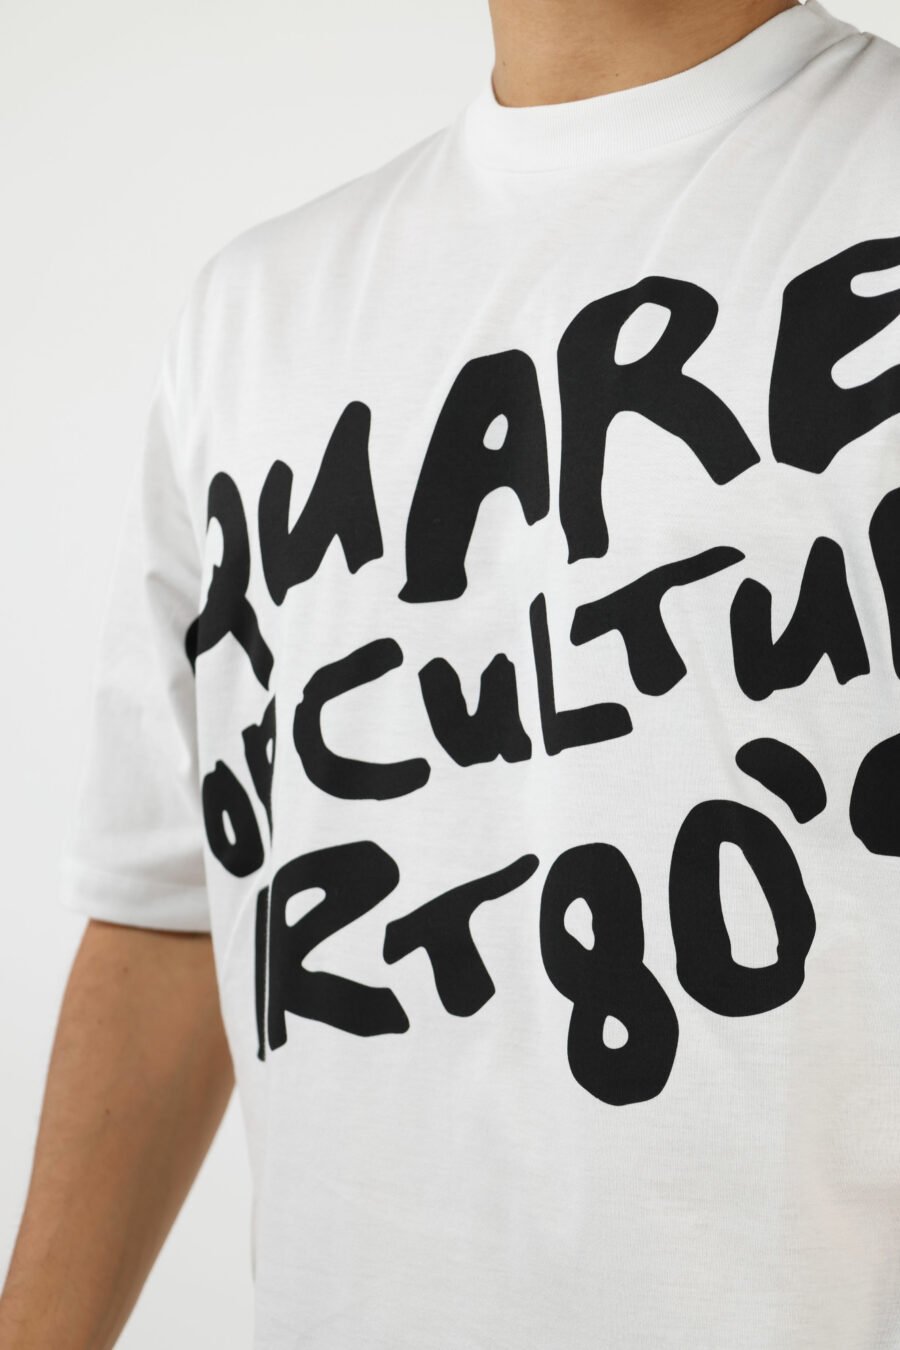 Camiseta blanca "oversize" con maxilogo "pop culture art 80's" - 8054148265694 2